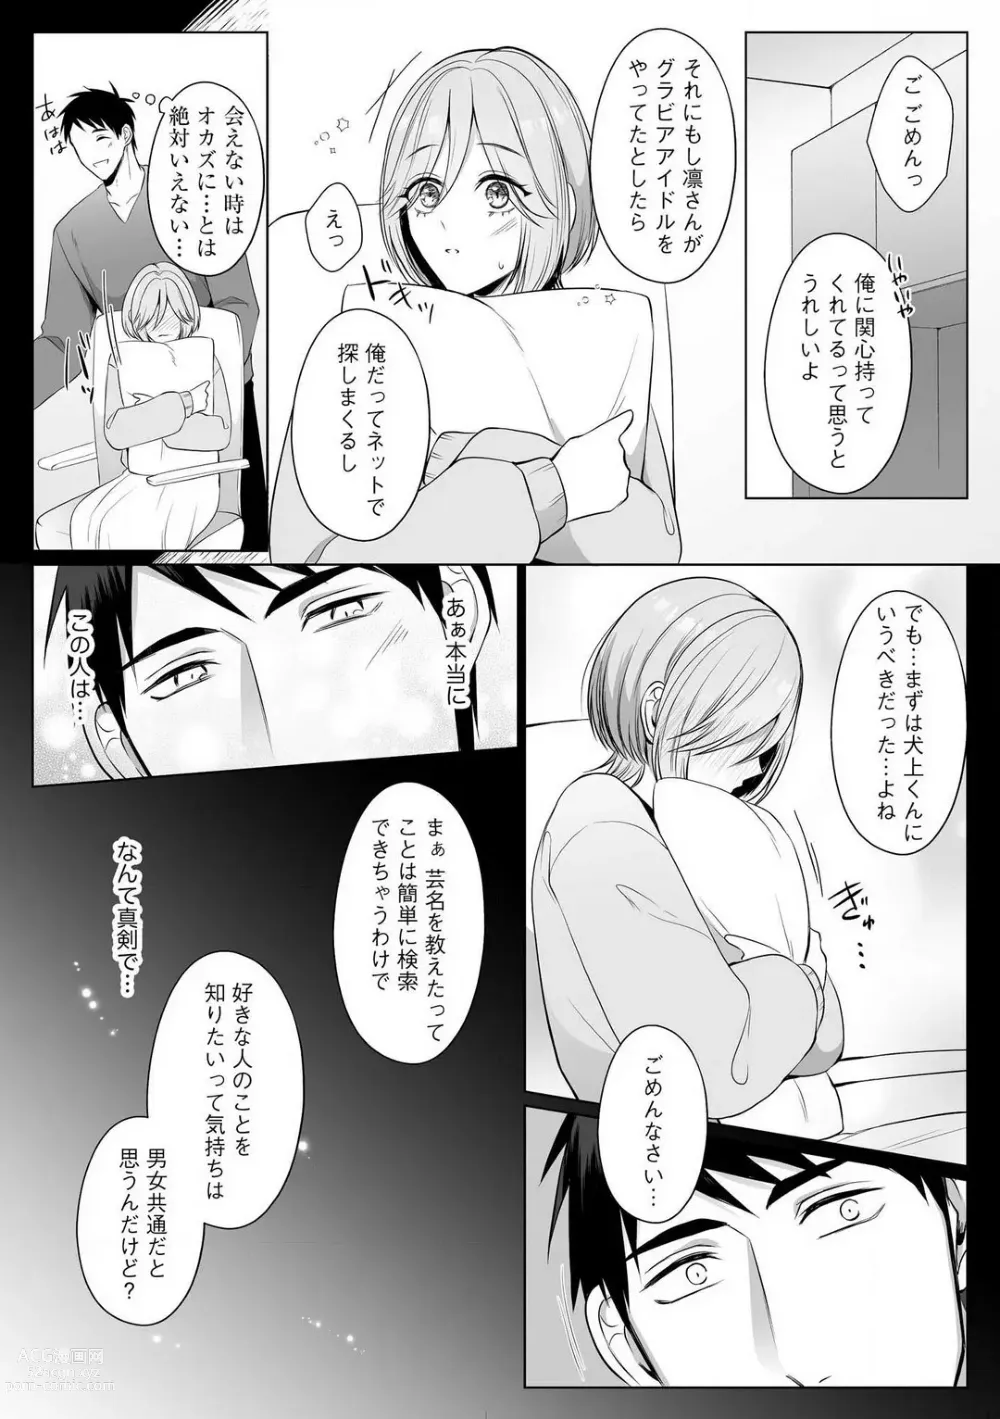 Page 126 of manga Sawayaka Wanko na Koibito wa Sugoteku AV Danyuu!! 1-5